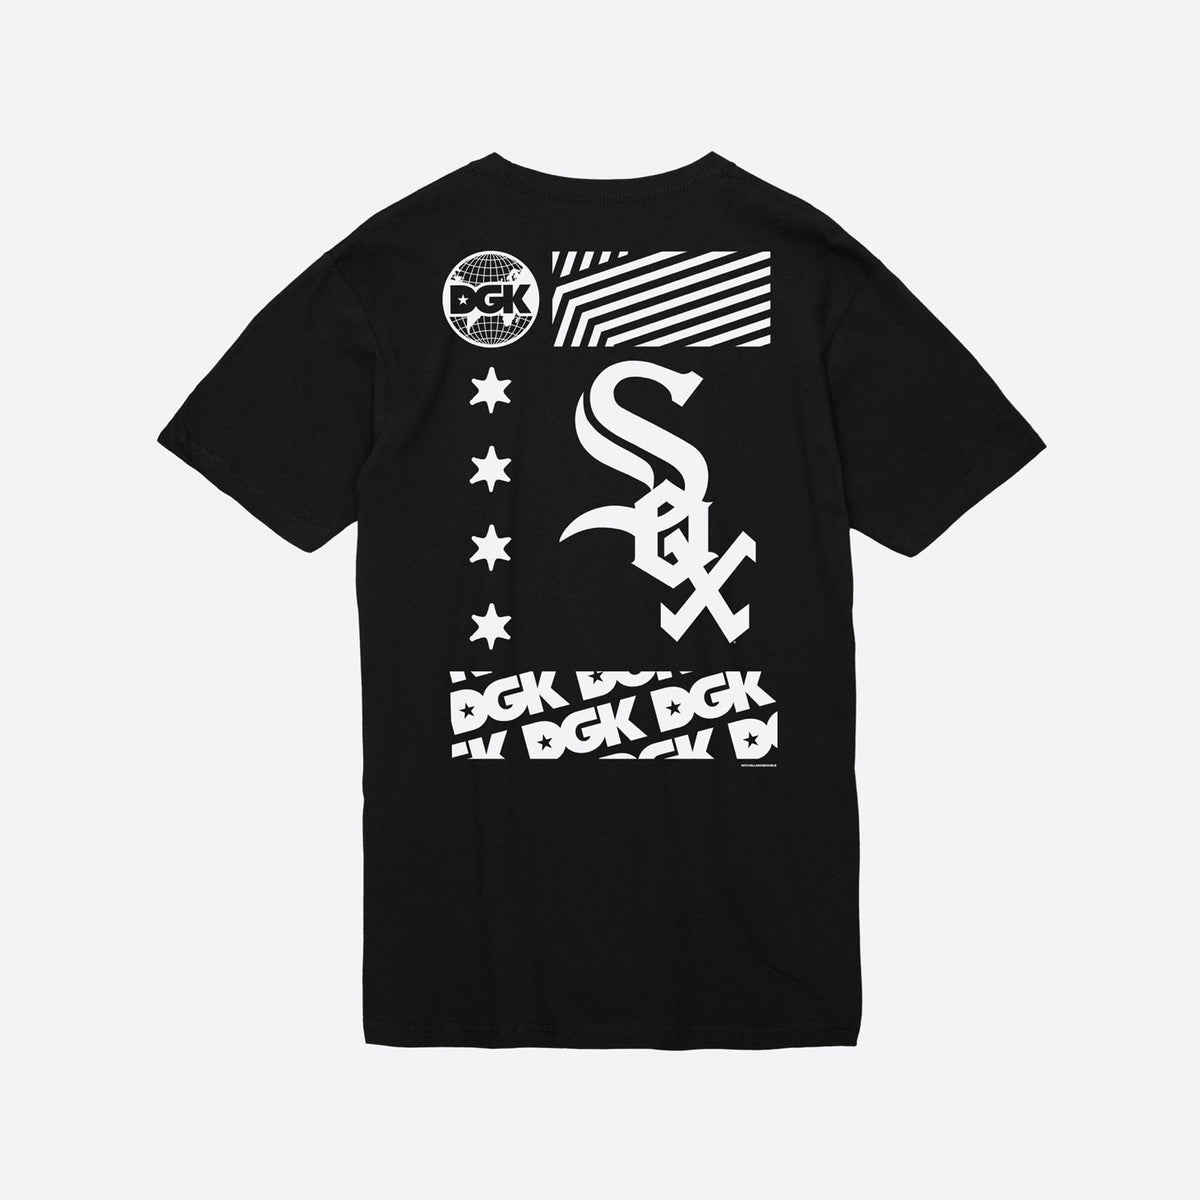 DGK x Chicago White Sox Hooded Sweatshirt (Black) Medium